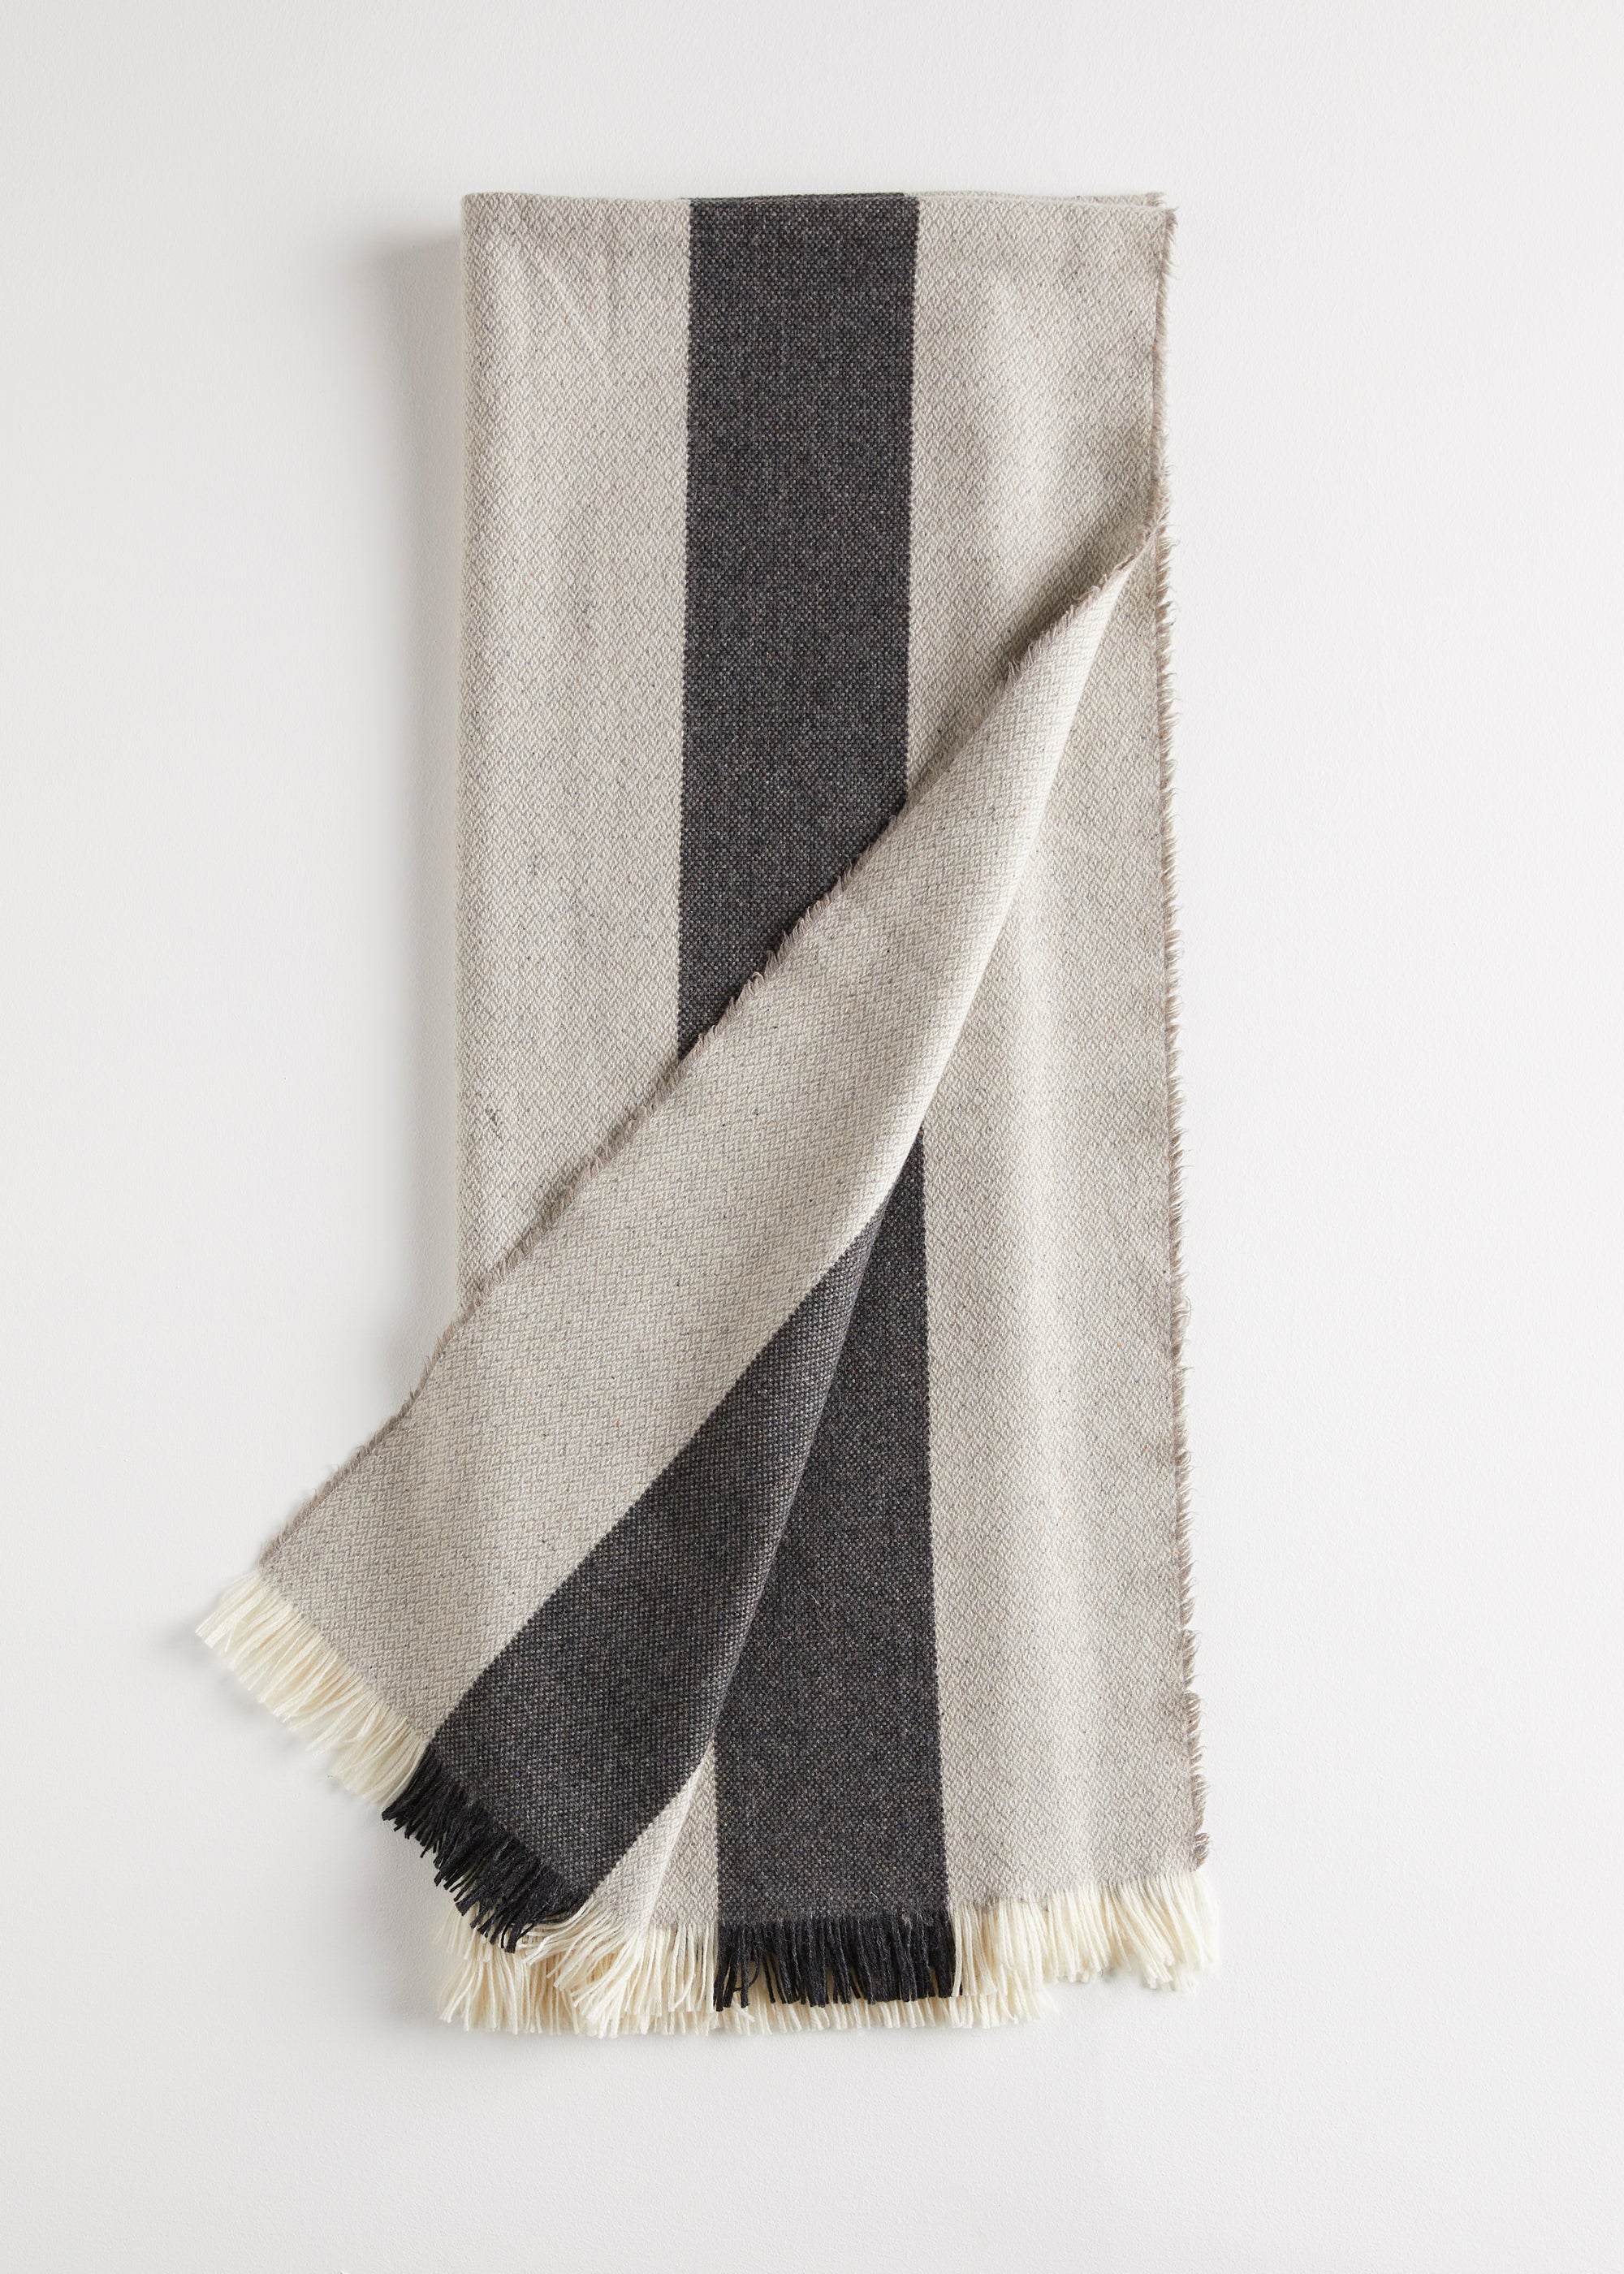 Wool Blanket by London Cloth Company